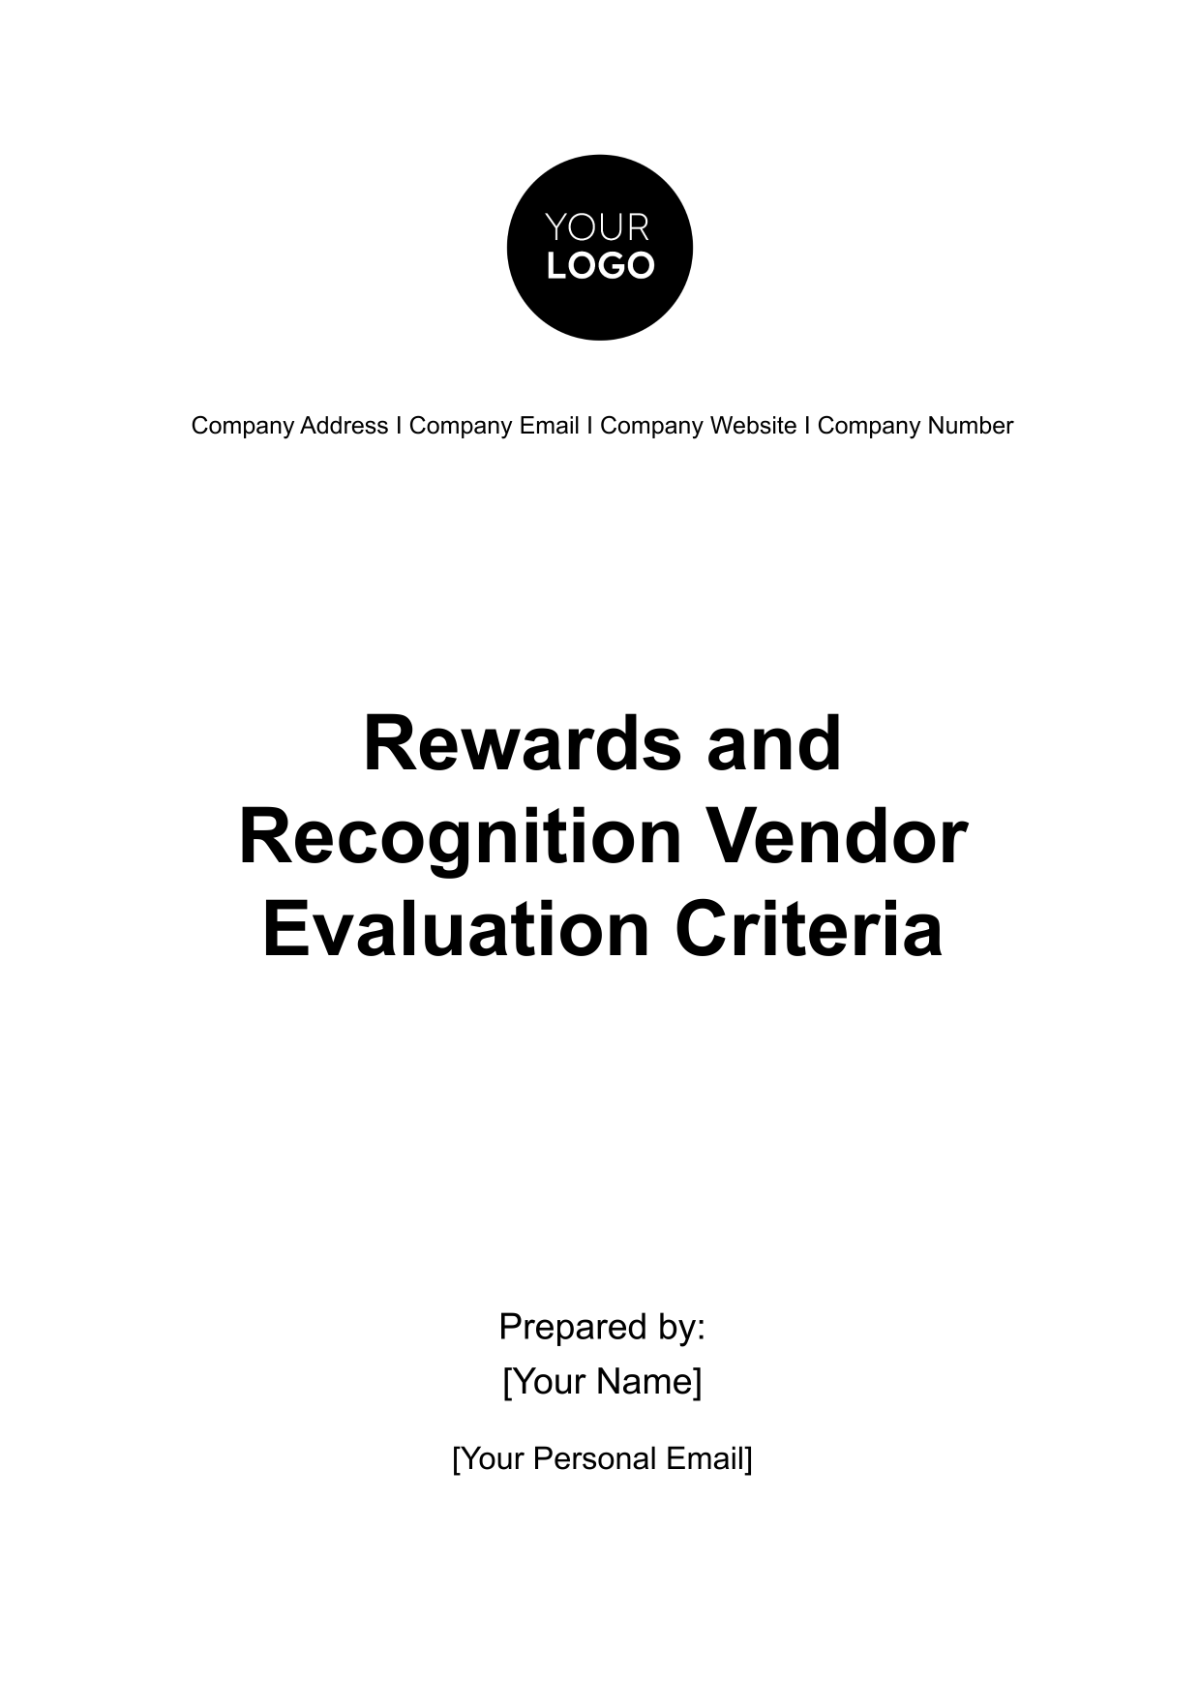 Free Rewards and Recognition Vendor Evaluation Criteria HR Template